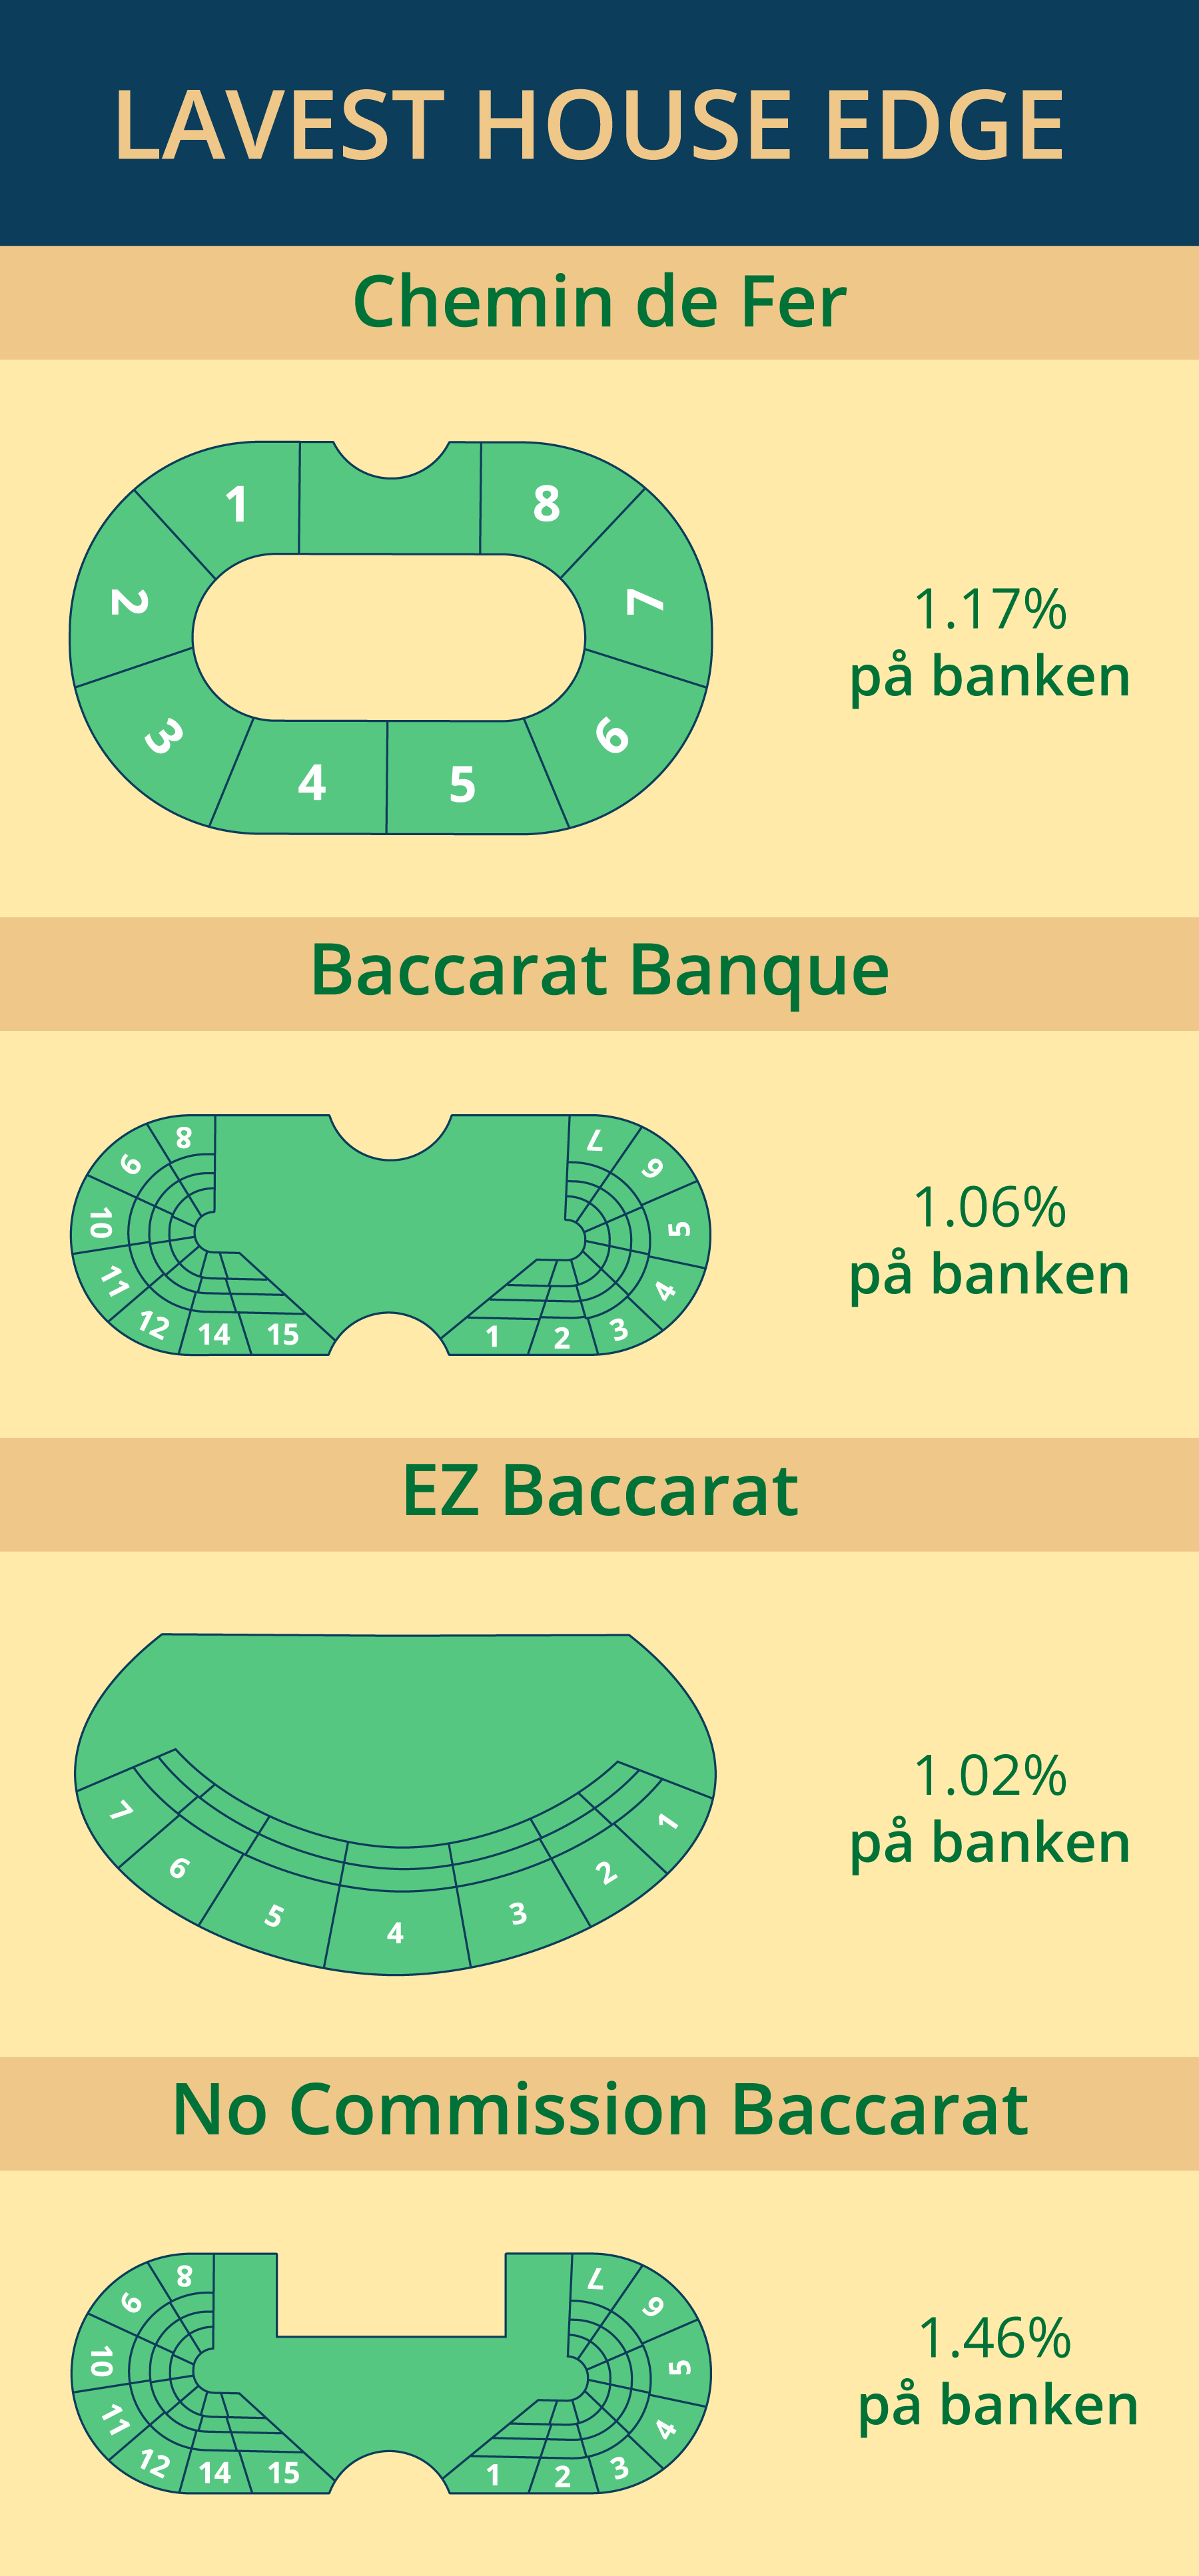 Baccarat-varianter med lavest House Edge